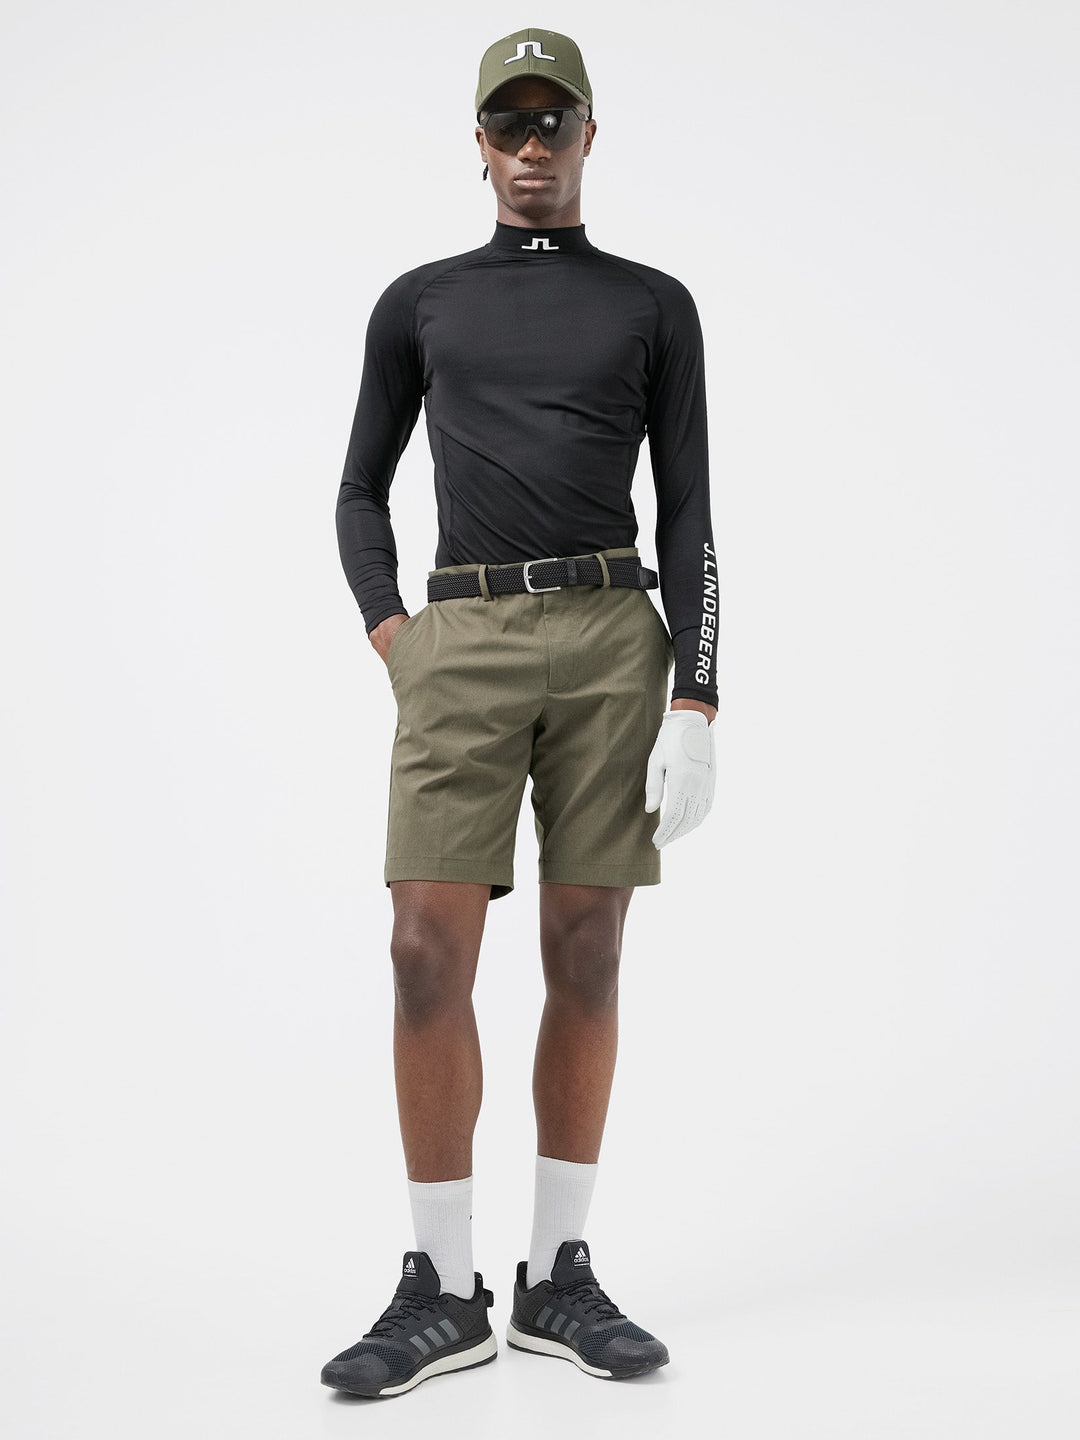 J.Lindeberg Mens Aello Soft Compression Shirt - BLACK - Golf Anything Canada